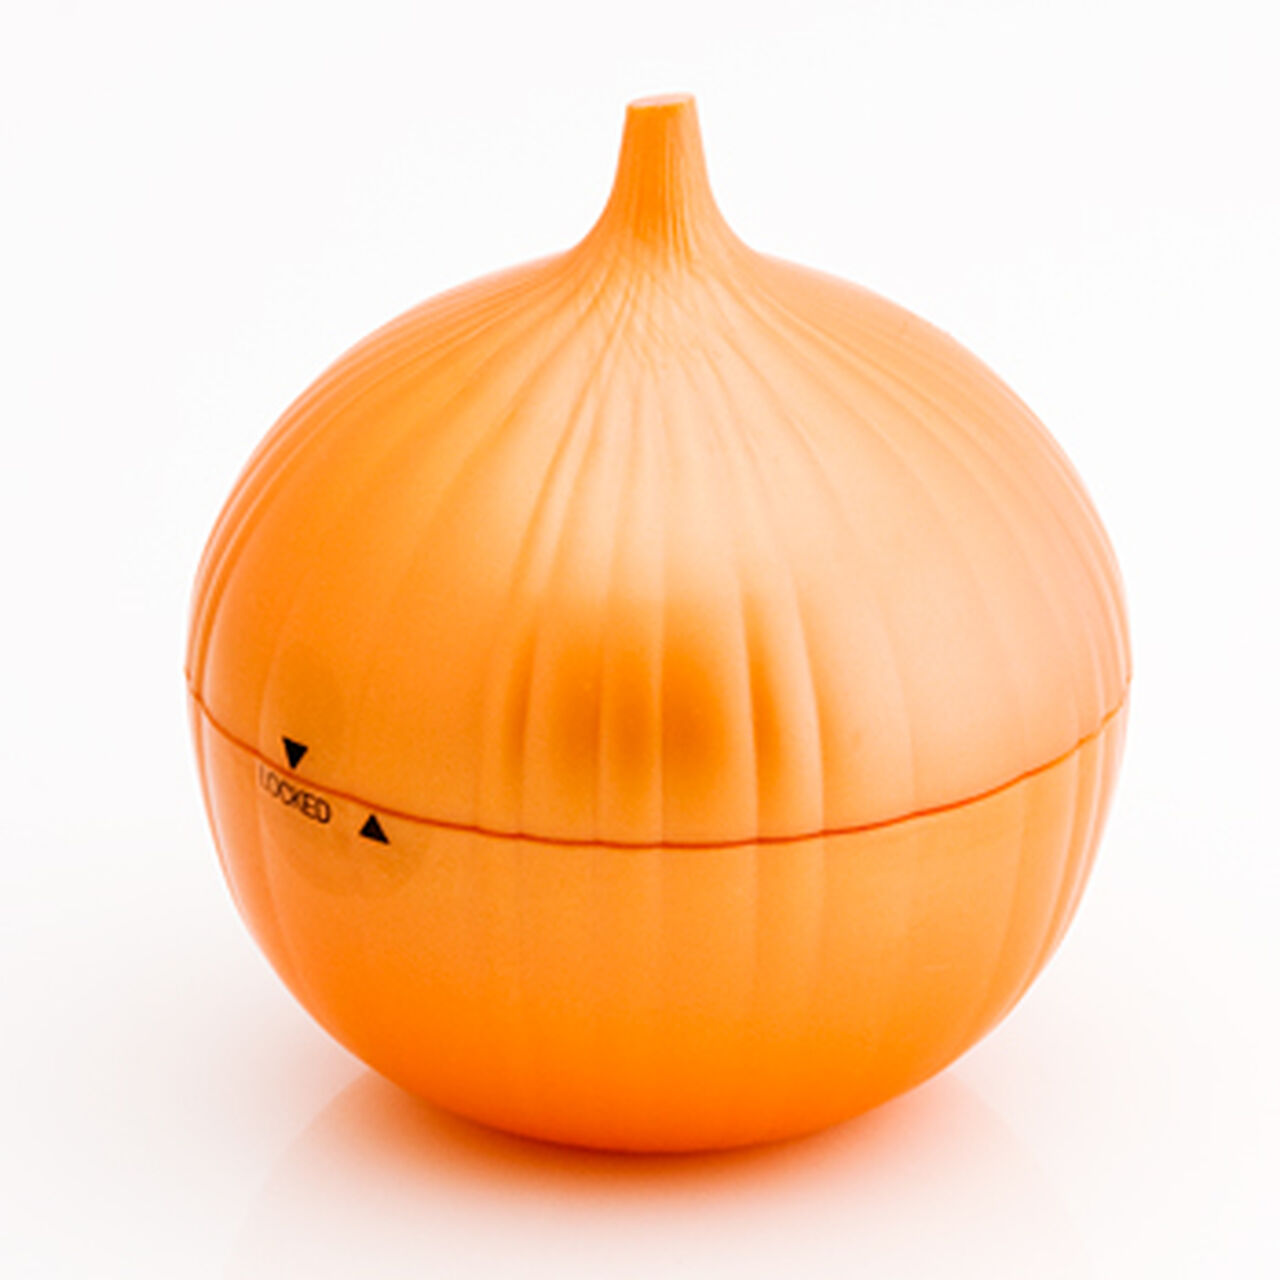 Hutzler Onion Saver - Yellow Onion  #0059, , large image number 0